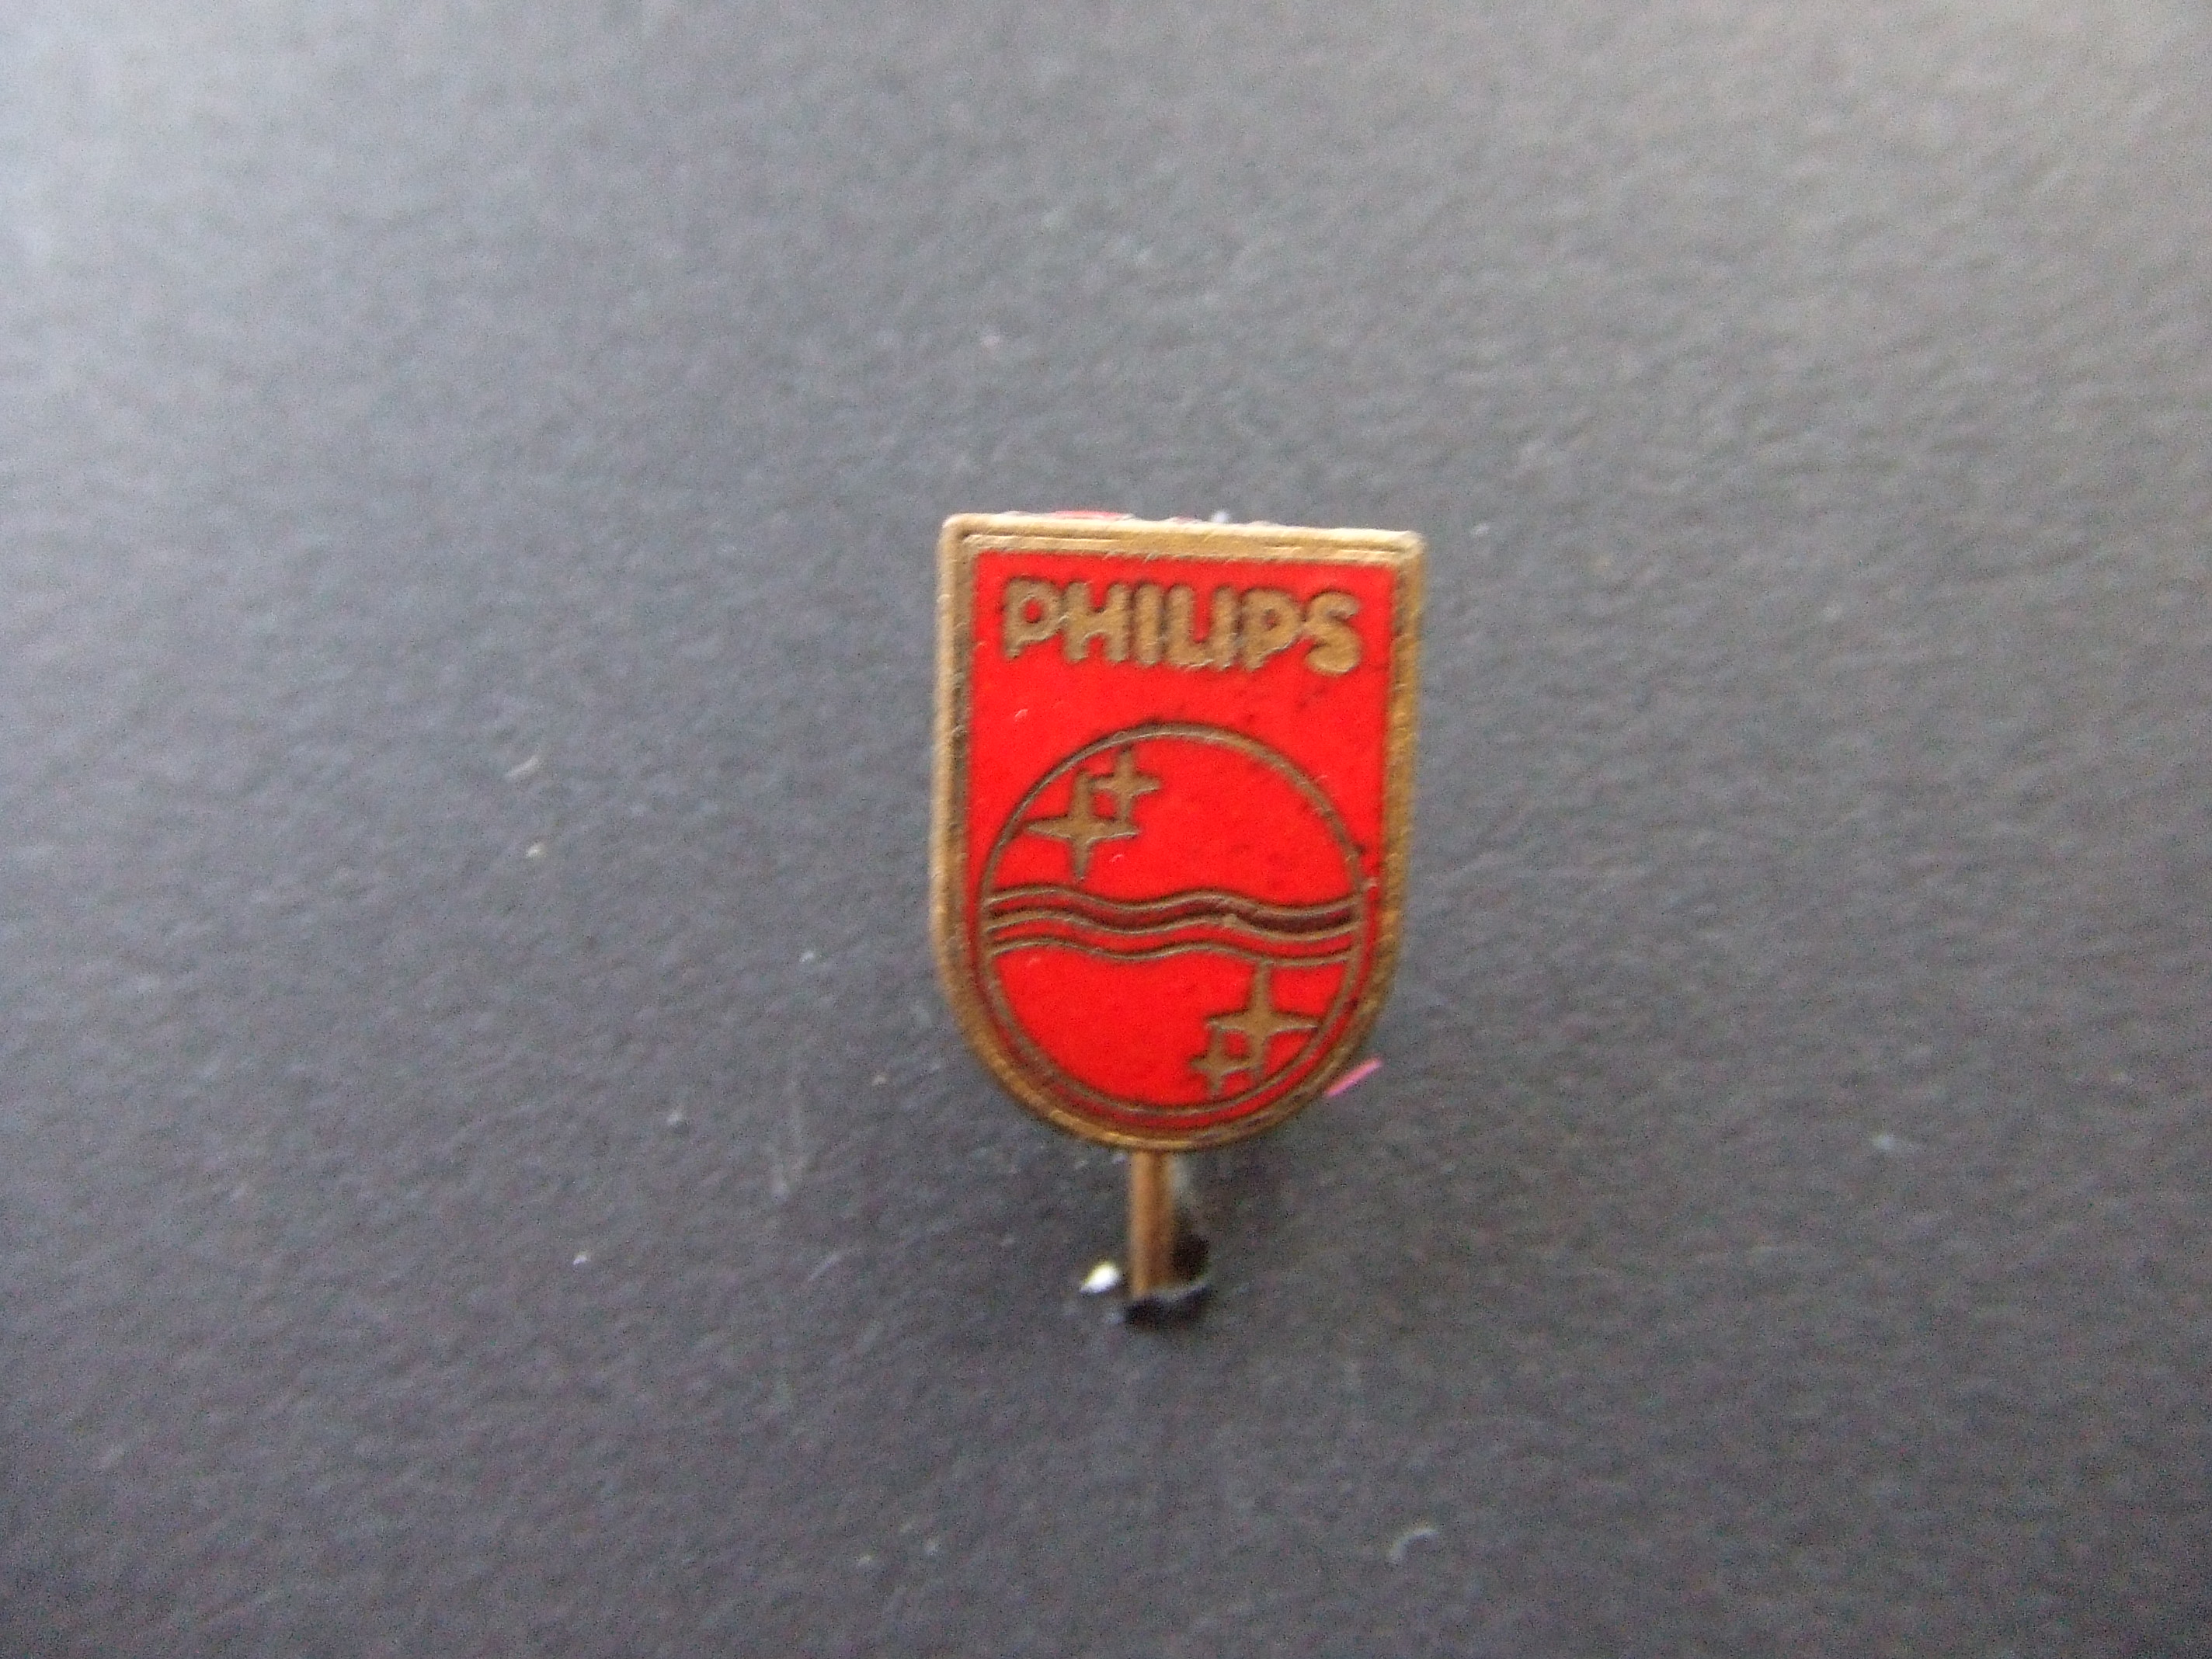 Phillips radio logo rood